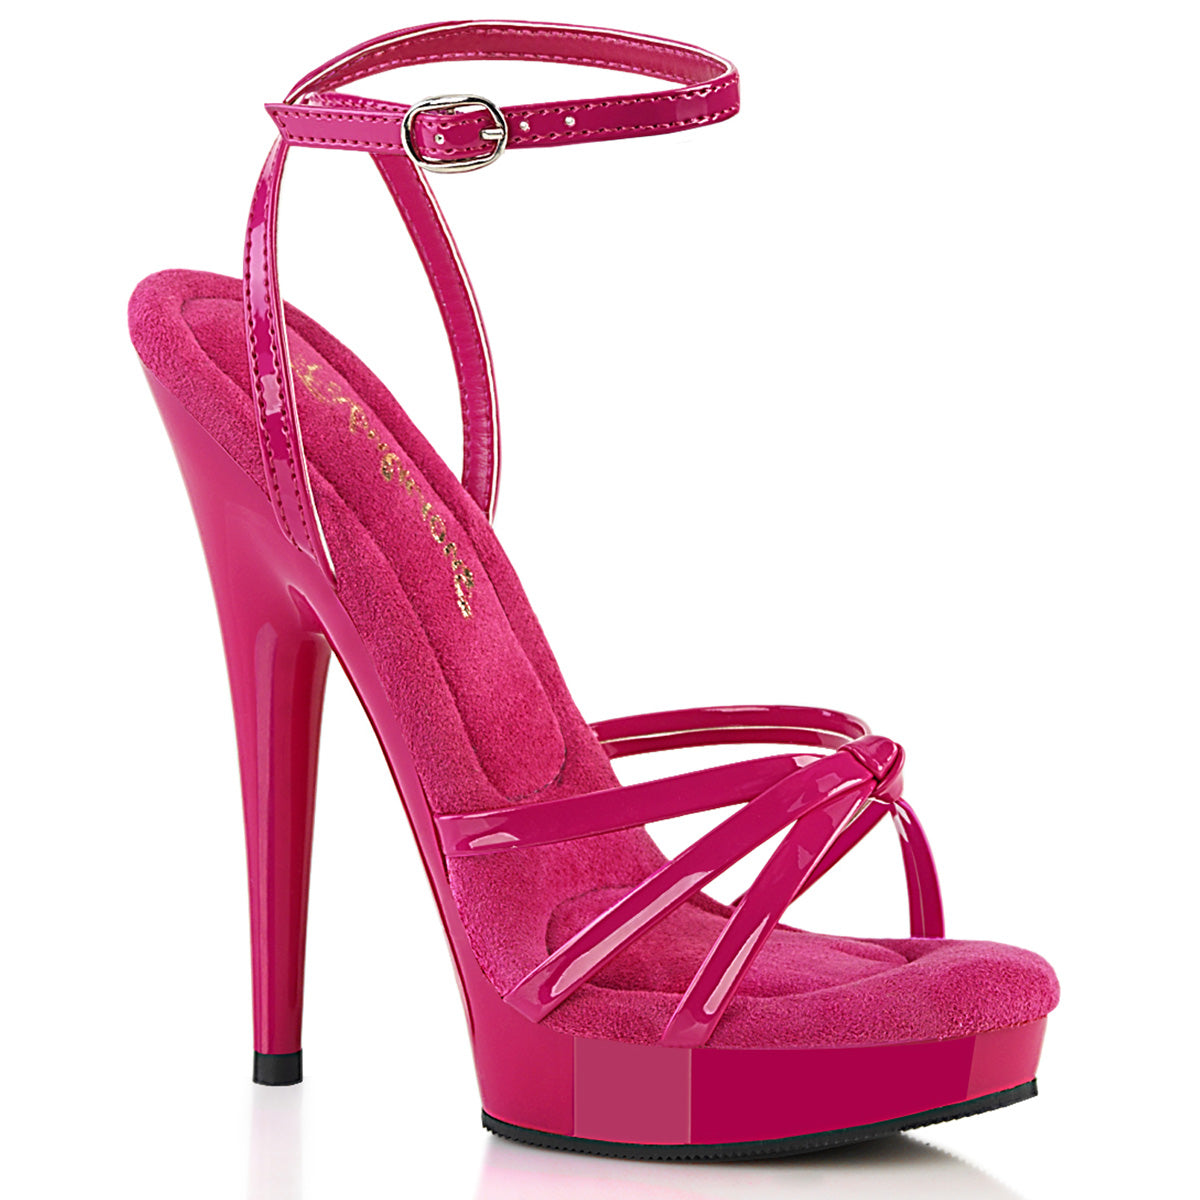 6" Heel, 1" Platform Wrap Around Knotted Hot Pink Strap Sandal